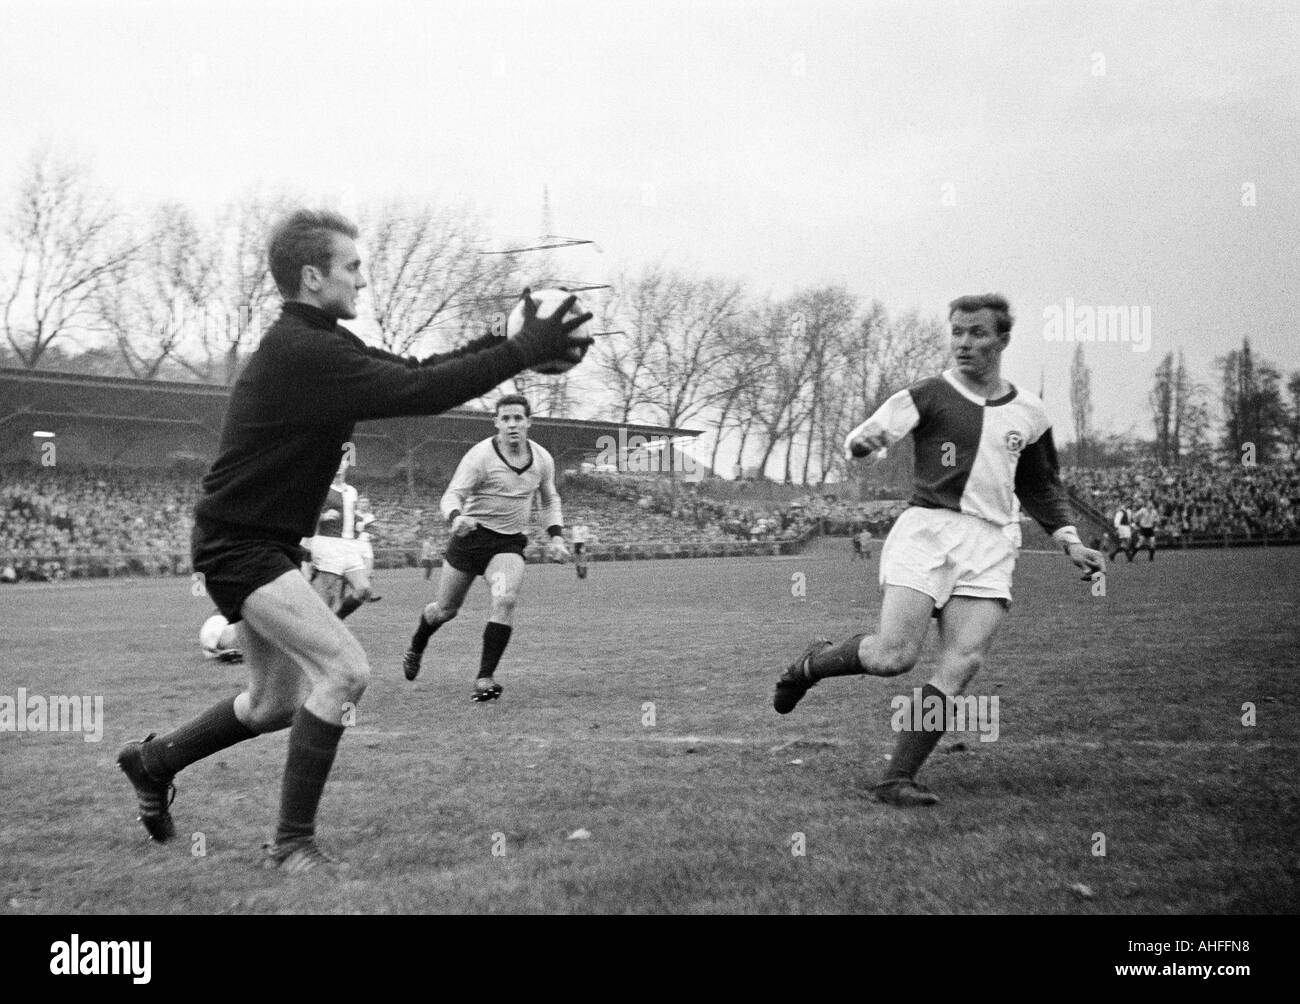 Calcio, Regionalliga Ovest, 1965/1966, Sportfreunde Hamborn 07 contro Fortuna Duesseldorf 0:1, Stadio Holtkamp im a Duisburg, scena del match, f.l.t.r. keeper Dirk Kruessenberg (Ddorf), Karl Heinz Kiss (07), Gert Wuensche (Ddorf) Foto Stock